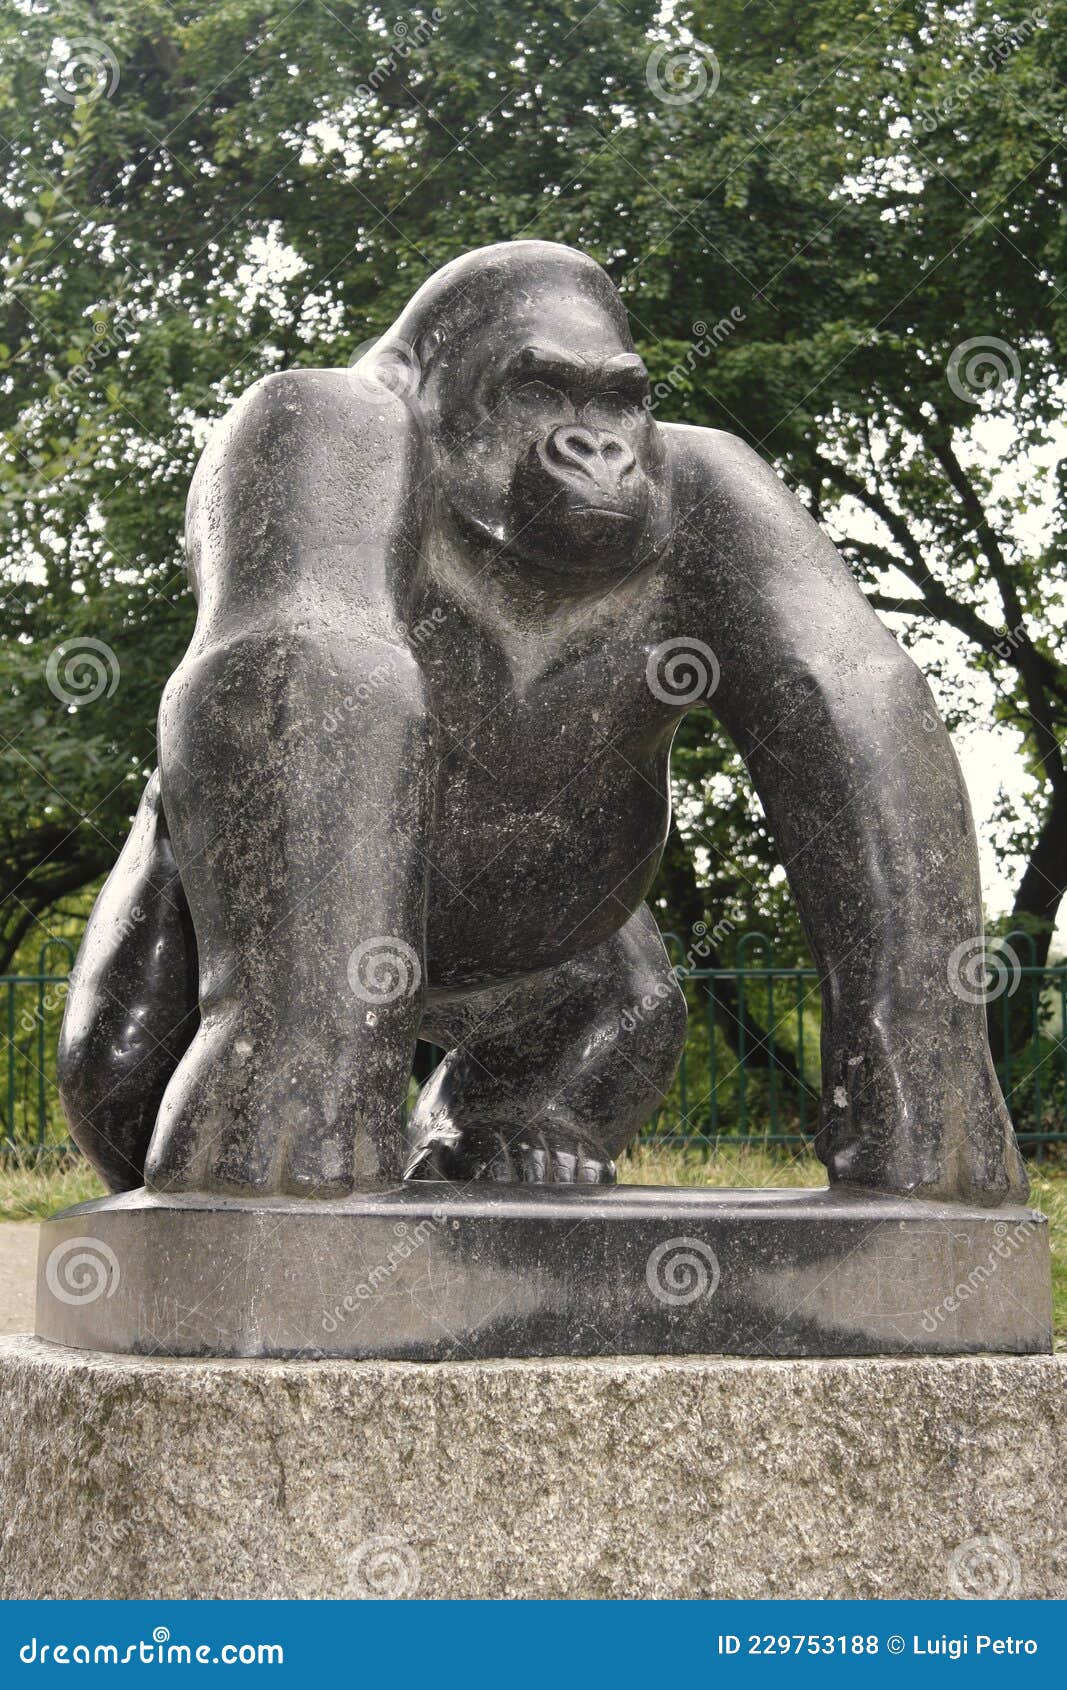 Statue of Guy the Gorilla Crystal Palace Park, London, United Kingdom ...